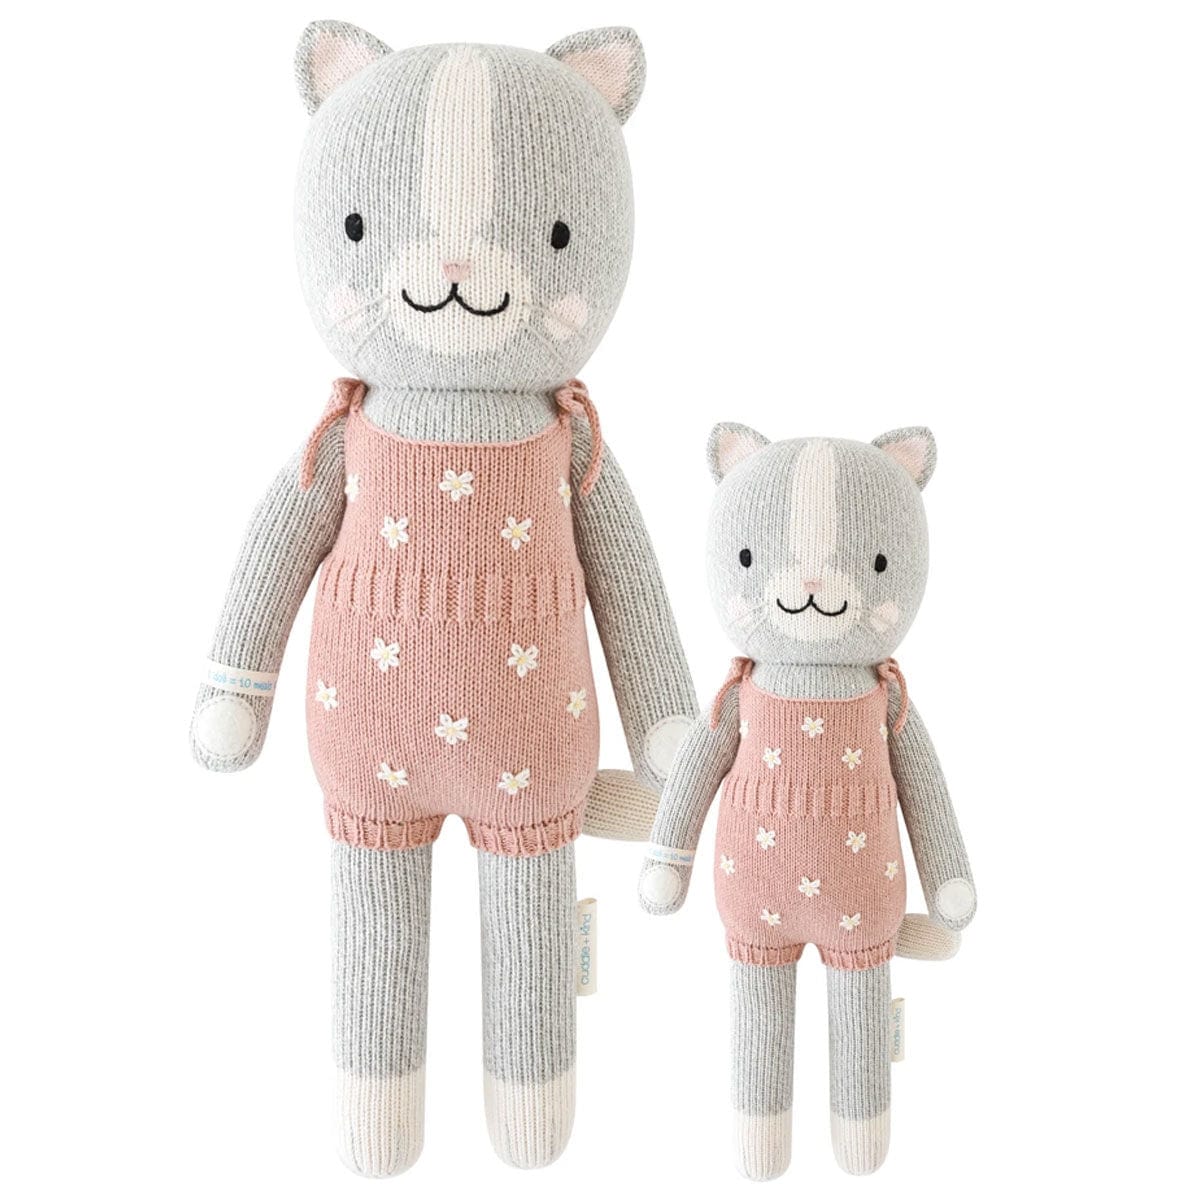 cuddle + kind doll Little (13") cuddle + kind Hand-Knit Doll - Daisy the Kitten